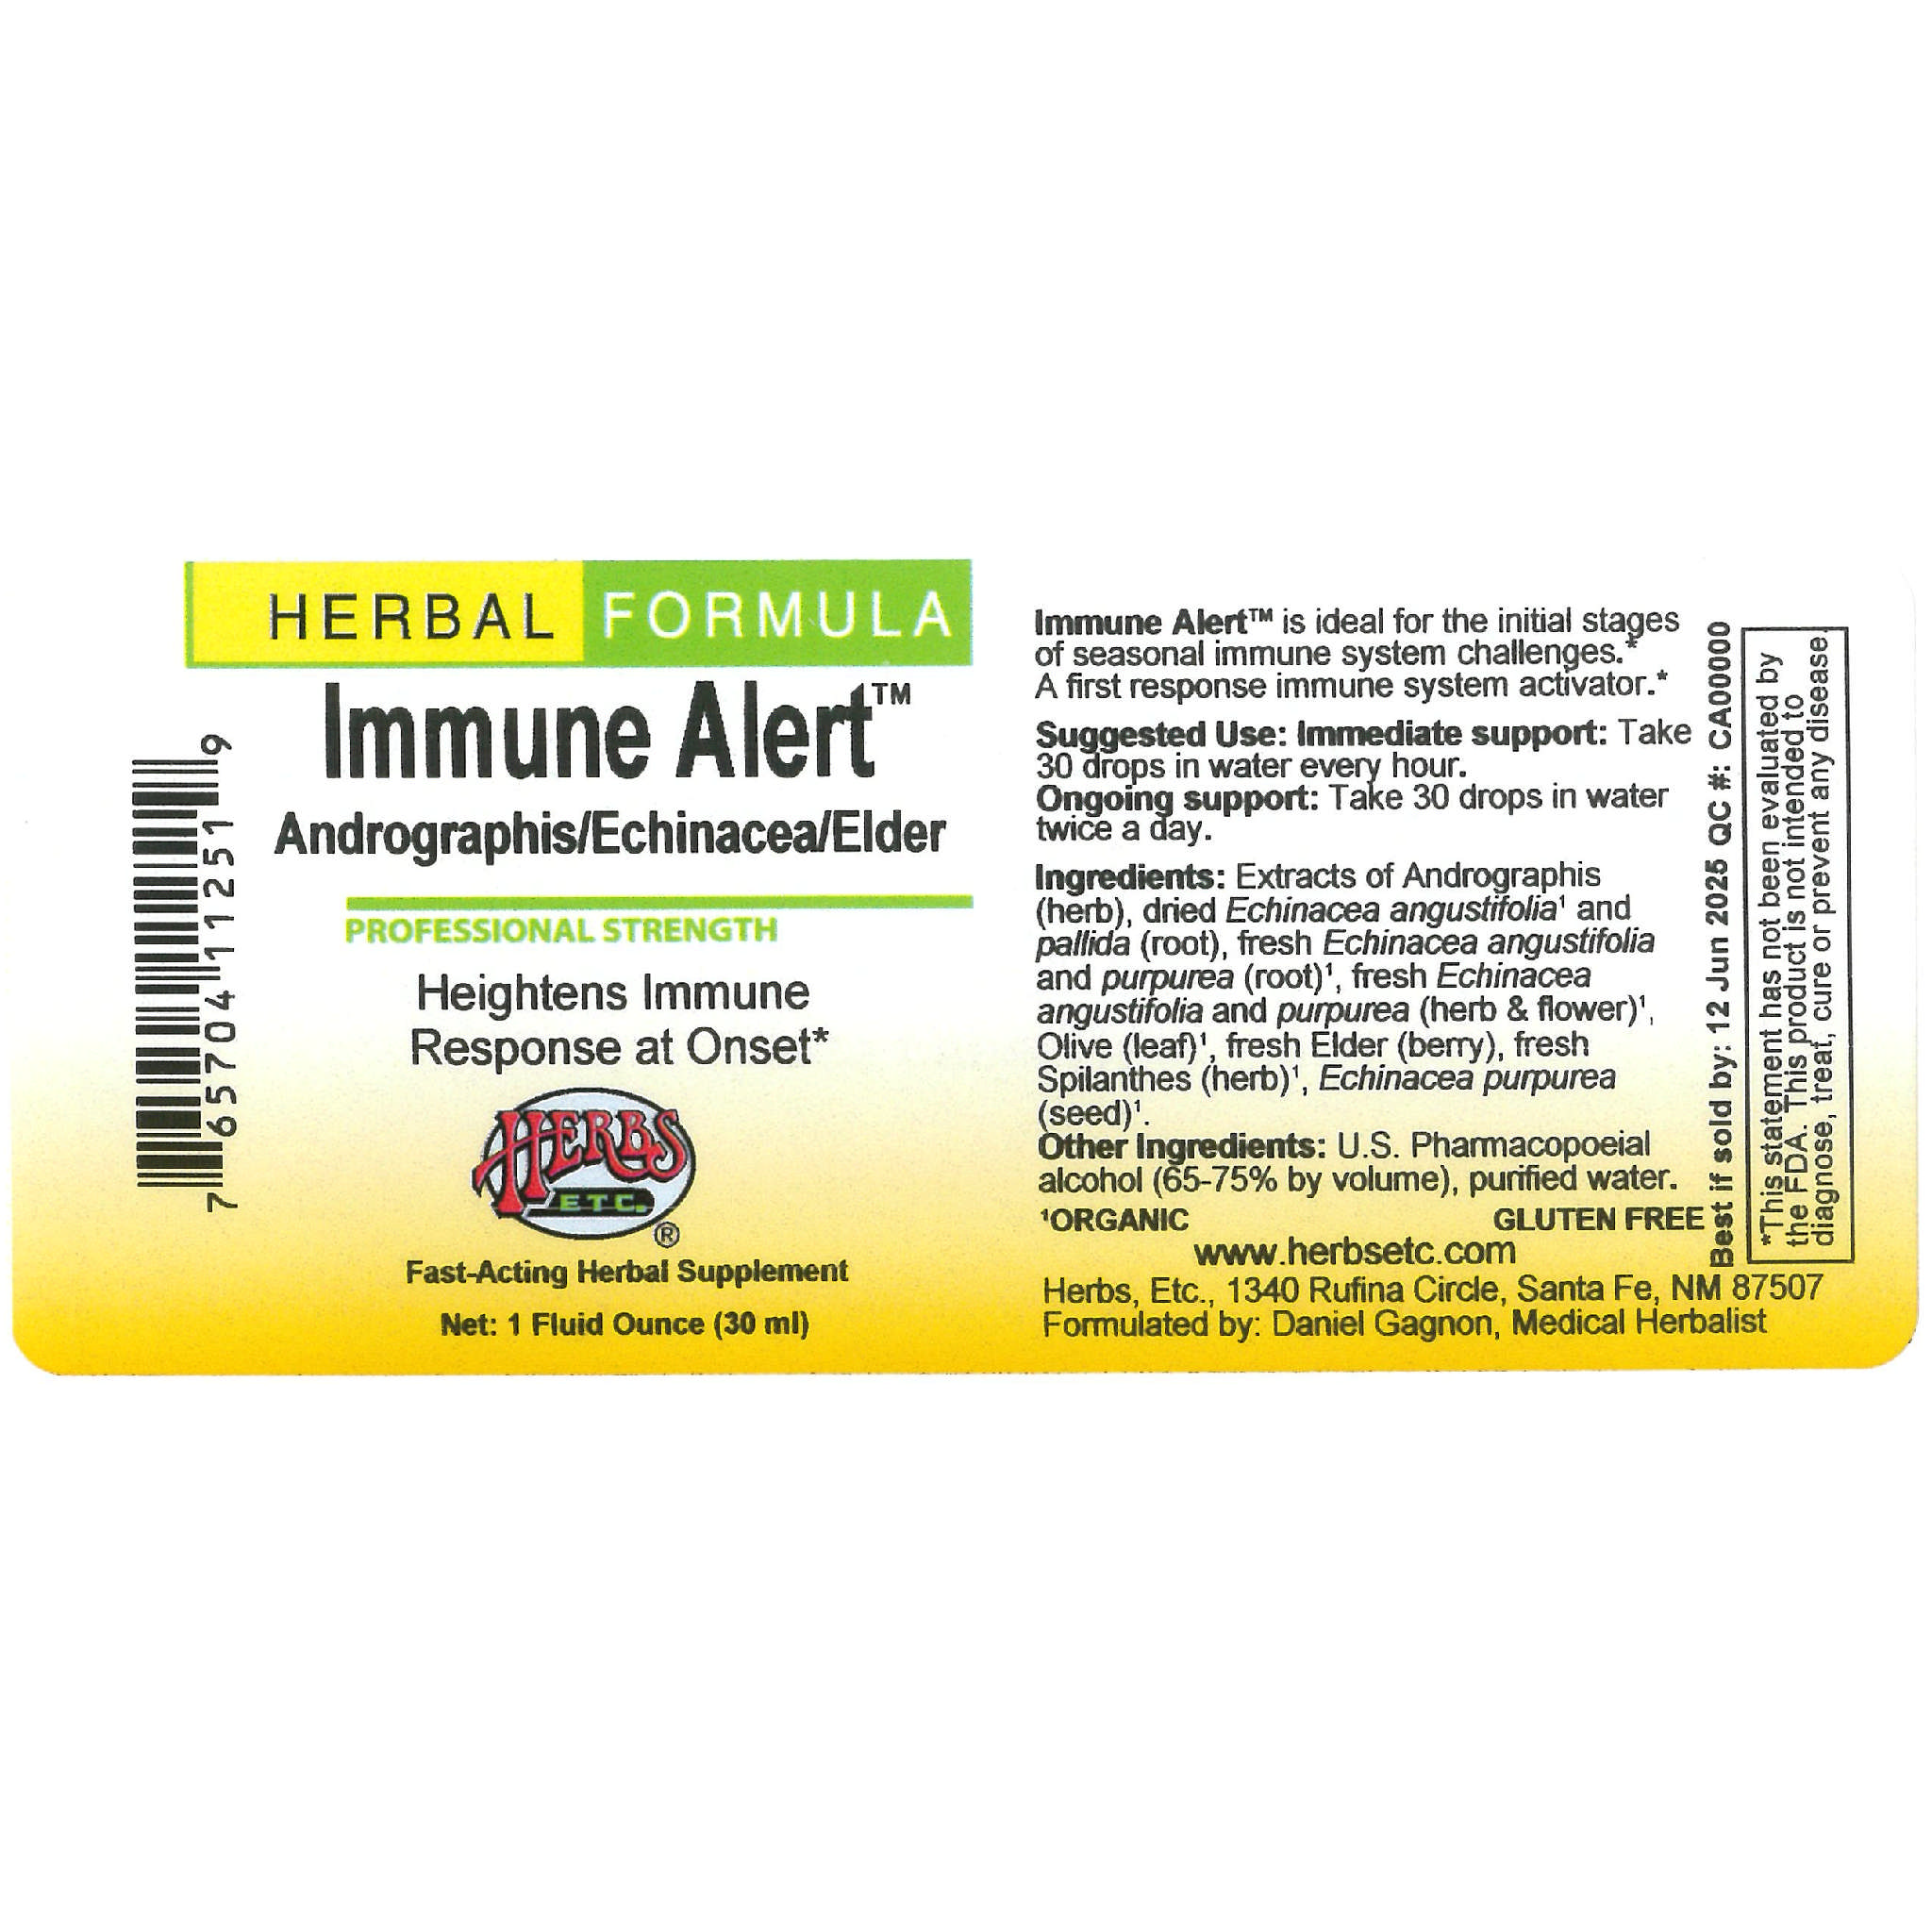 Herbs Etc - Immune Alert